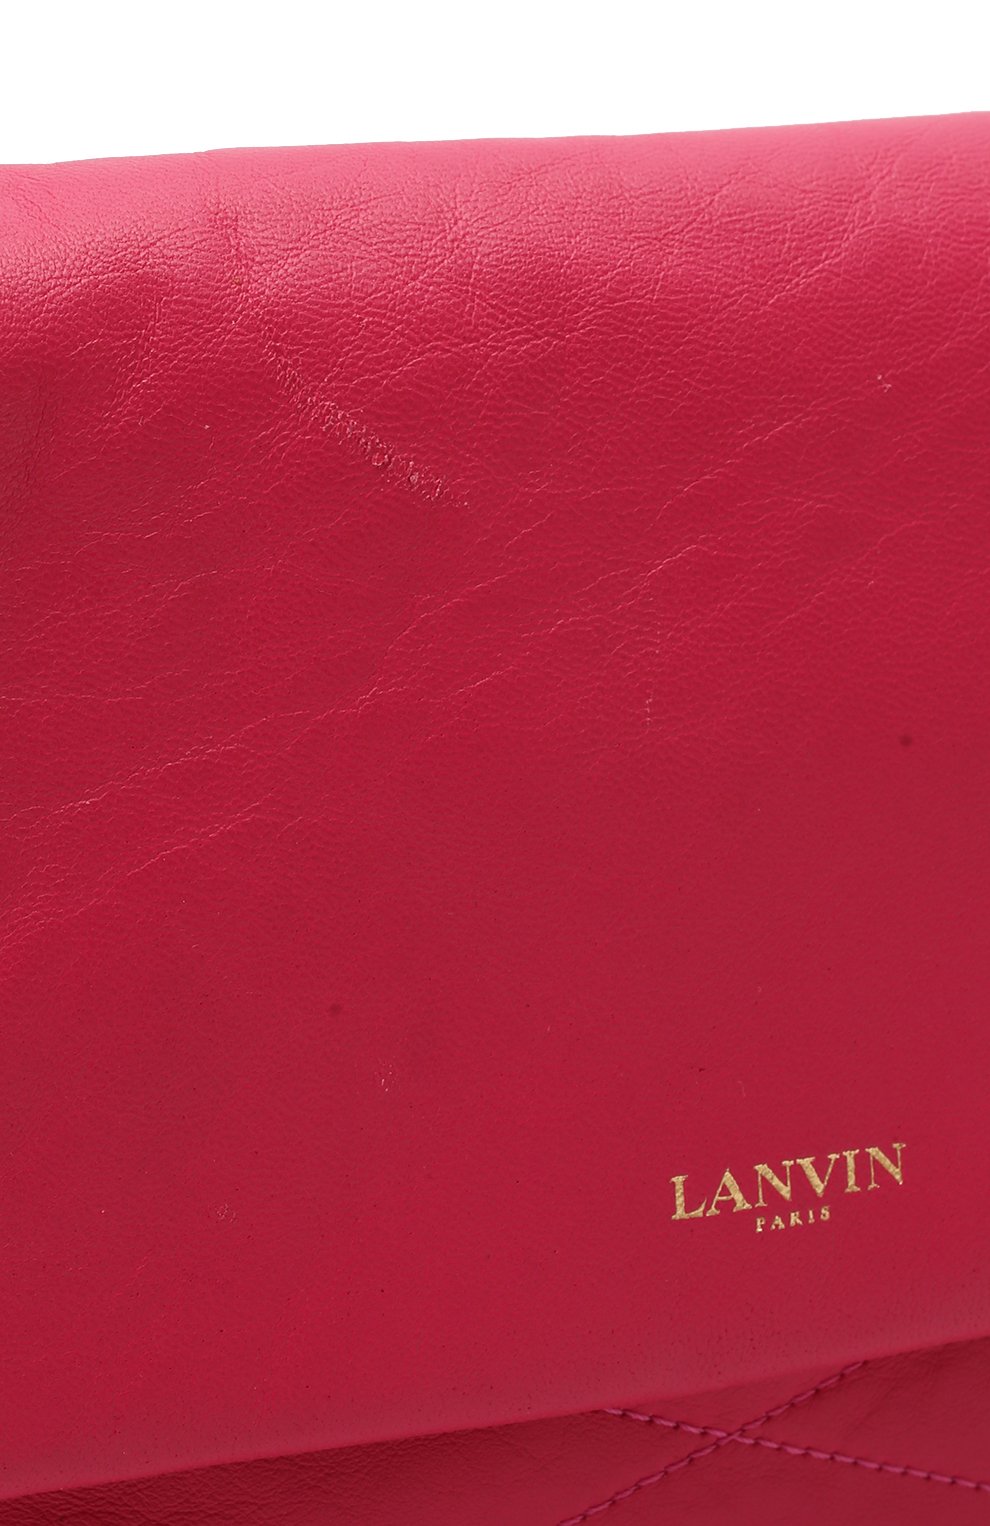 Сумка Sugar mini | Lanvin | Розовый - 8